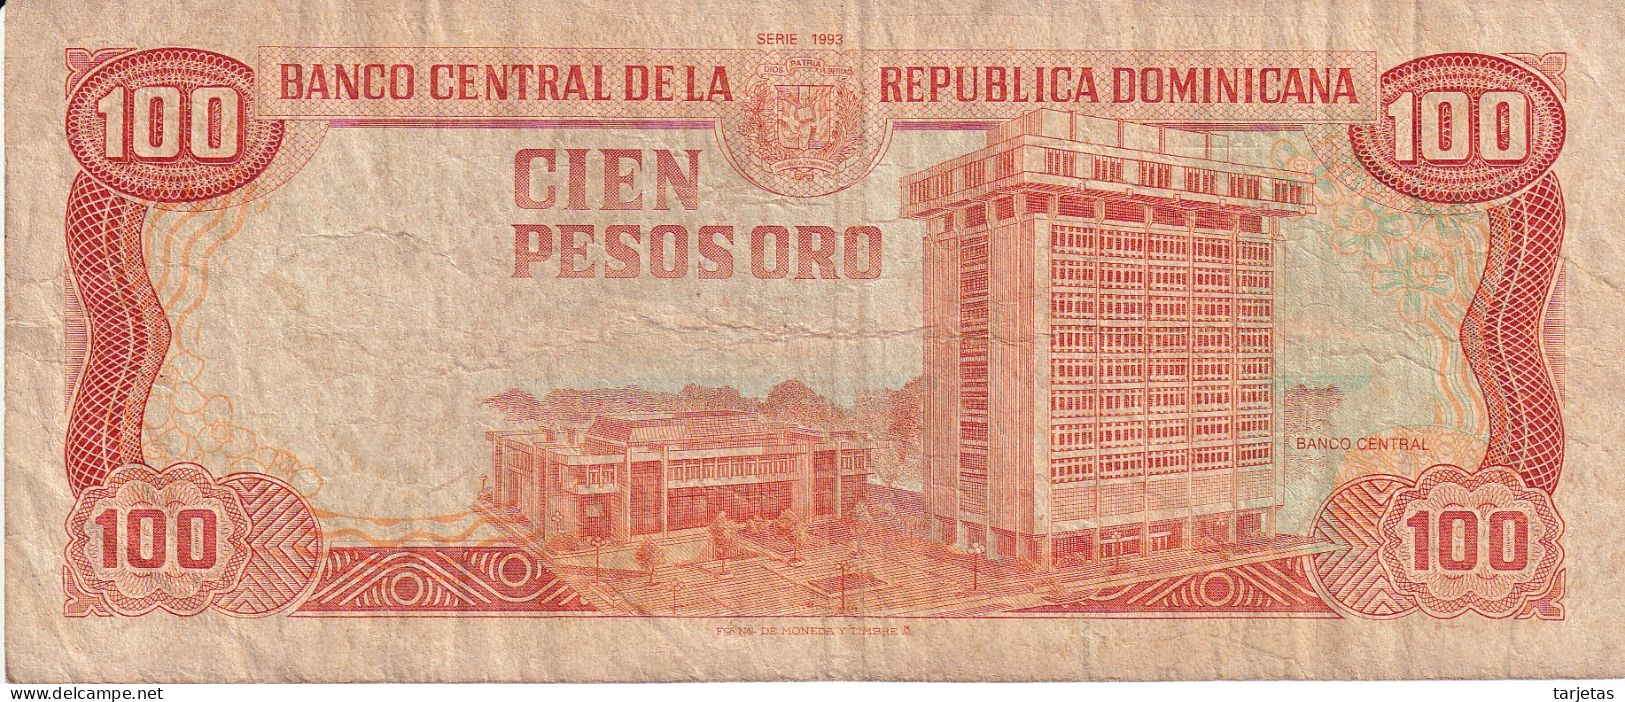 BILLETE DE REP. DOMINICANA DE 100 PESOS ORO DEL AÑO 1993 SERIE B (BANKNOTE) - Repubblica Dominicana